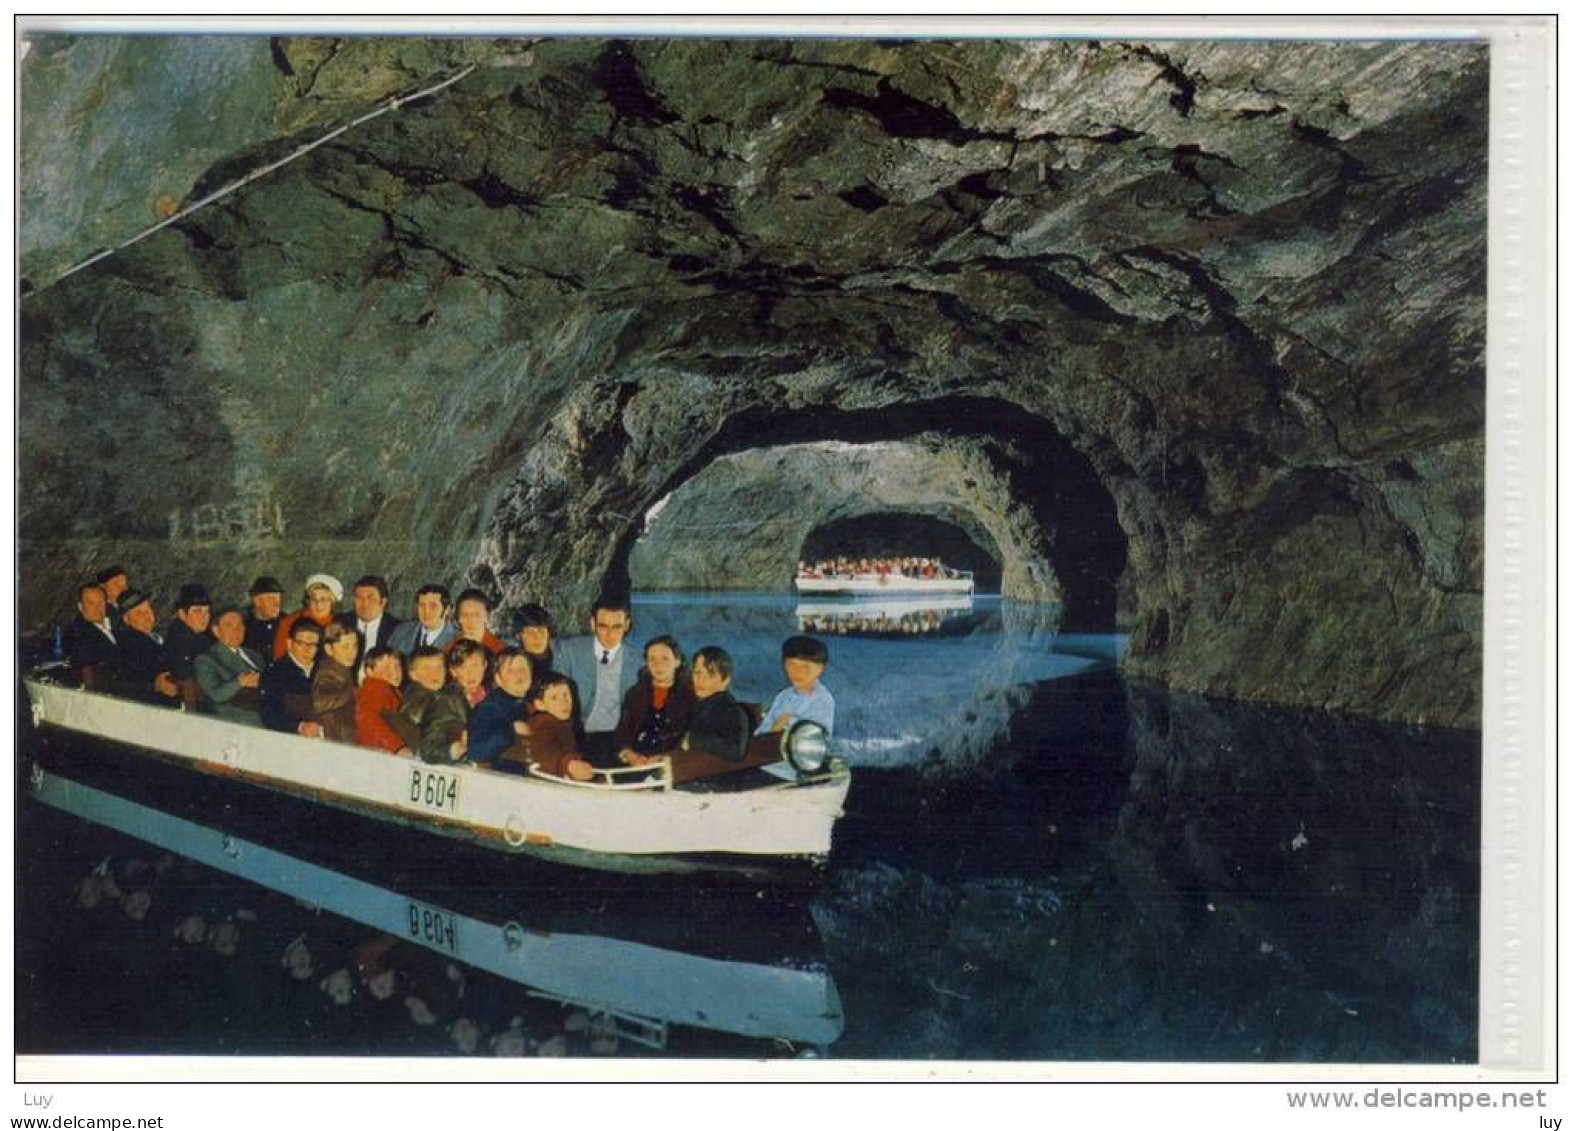 MÖDLING, NÖ - Seegrotte In Hinterbrühl, Höhle, Cave, Grotte,  Unterirdischer See, Motorbootfahrt - Mödling